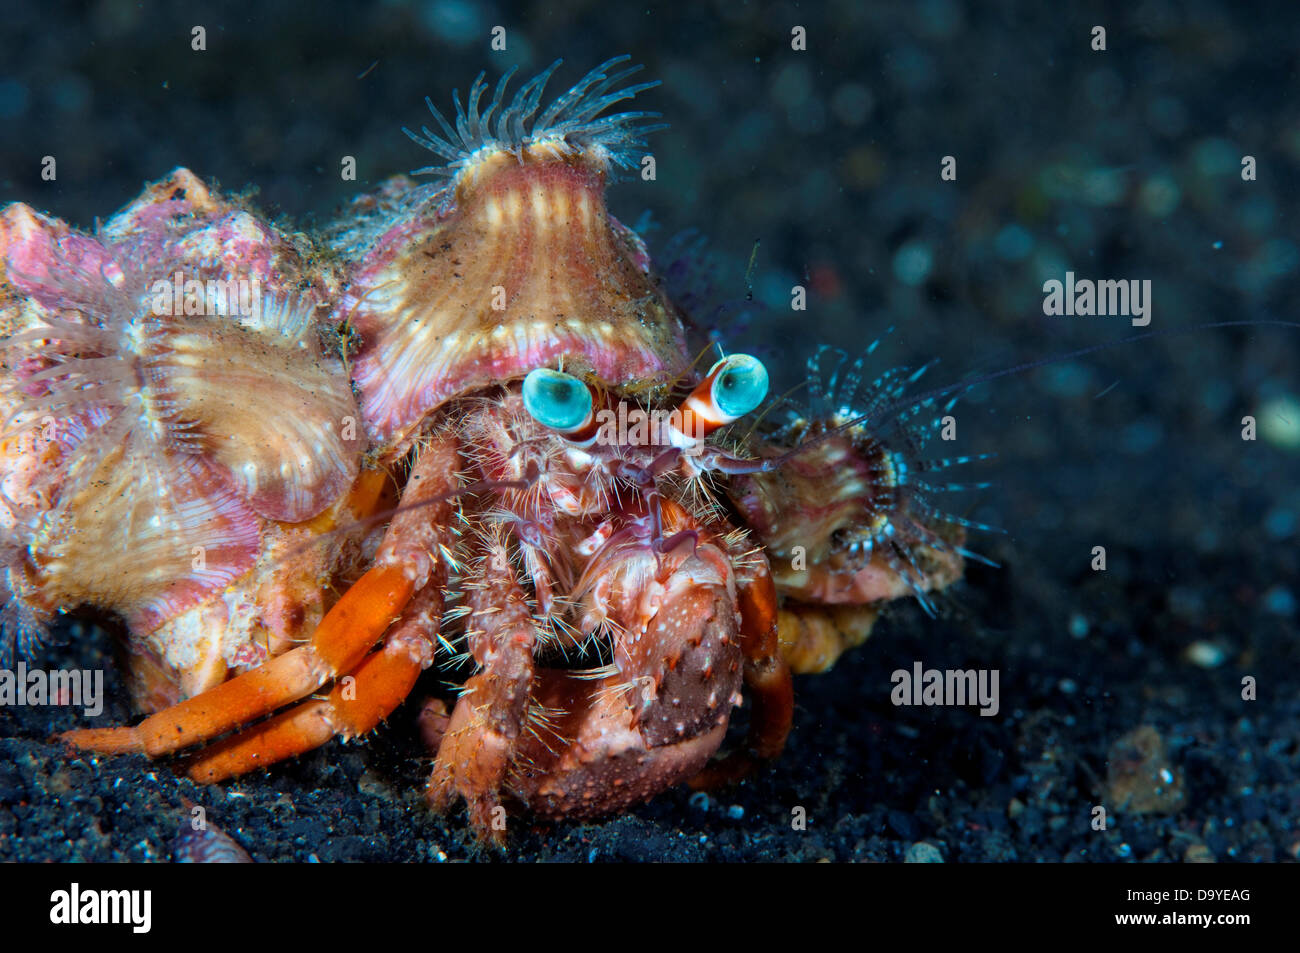 Close-up of a Hermit crab (Dardanus pedunculatus) with Sea anemones on shell, Lembeh Strait, Sulawesi, Indonesia Stock Photo